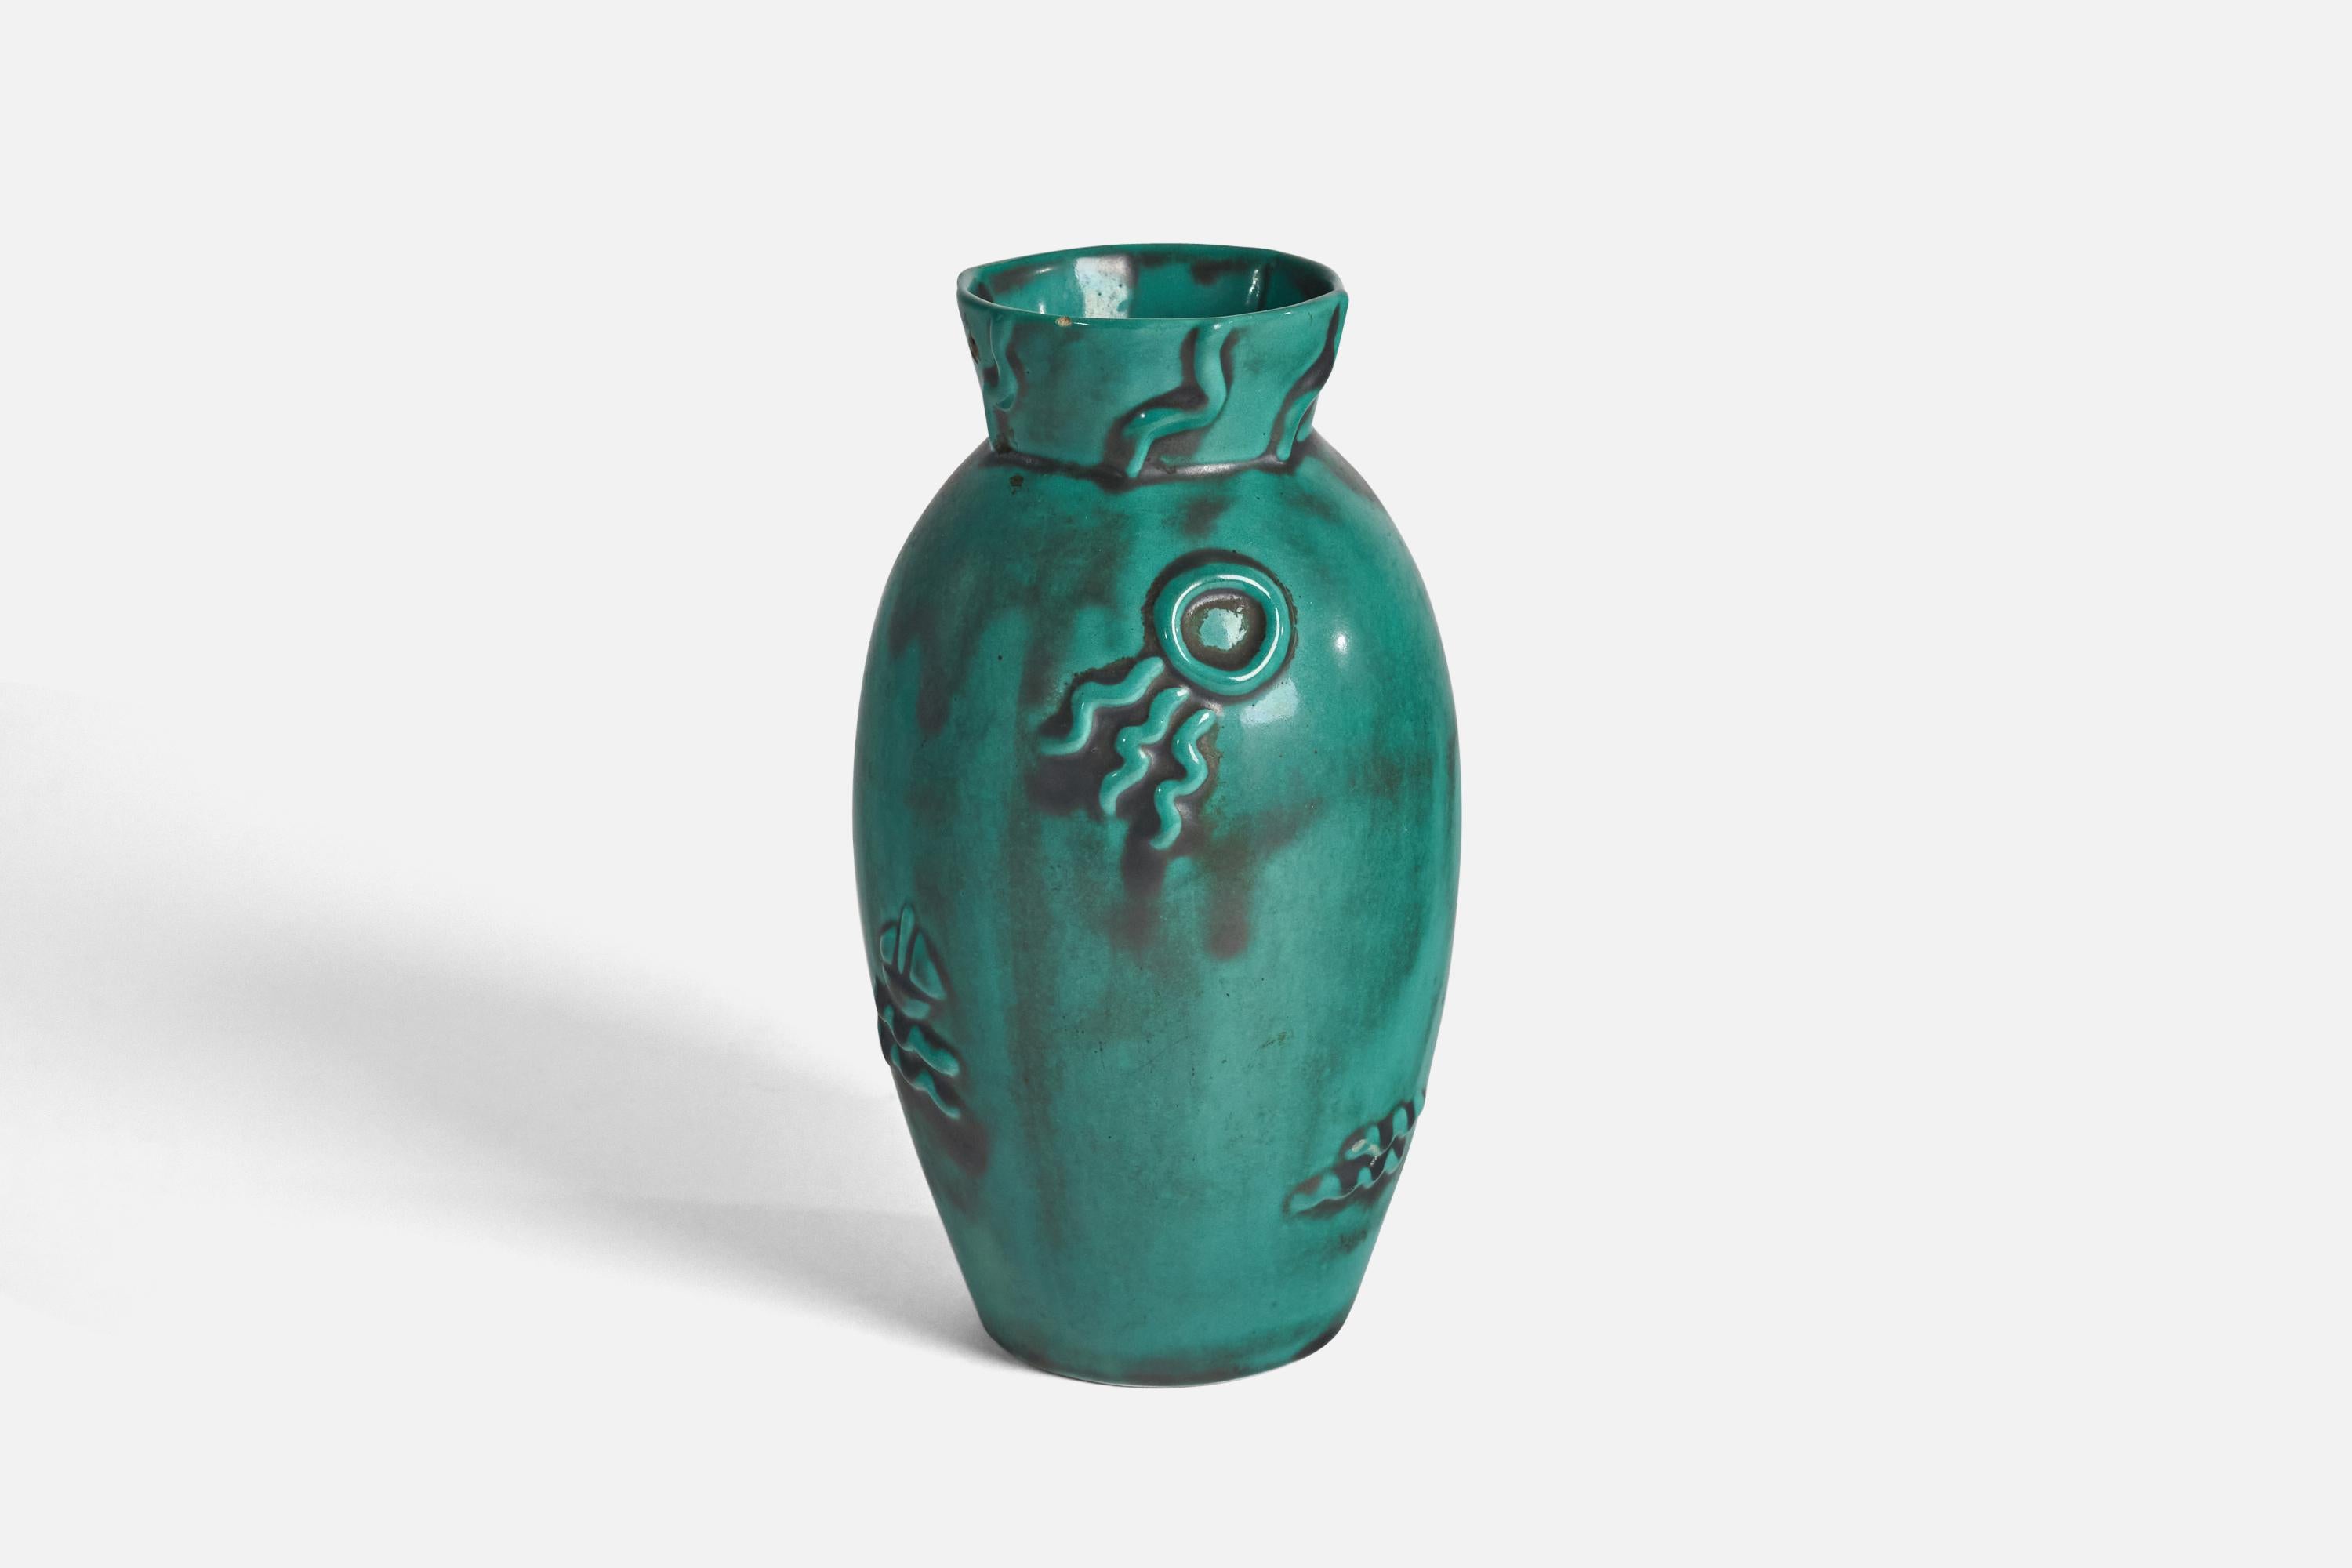 A green, glazed earthenware vase designed and produced by Upsala-Ekeby, Sweden, 1940s.

